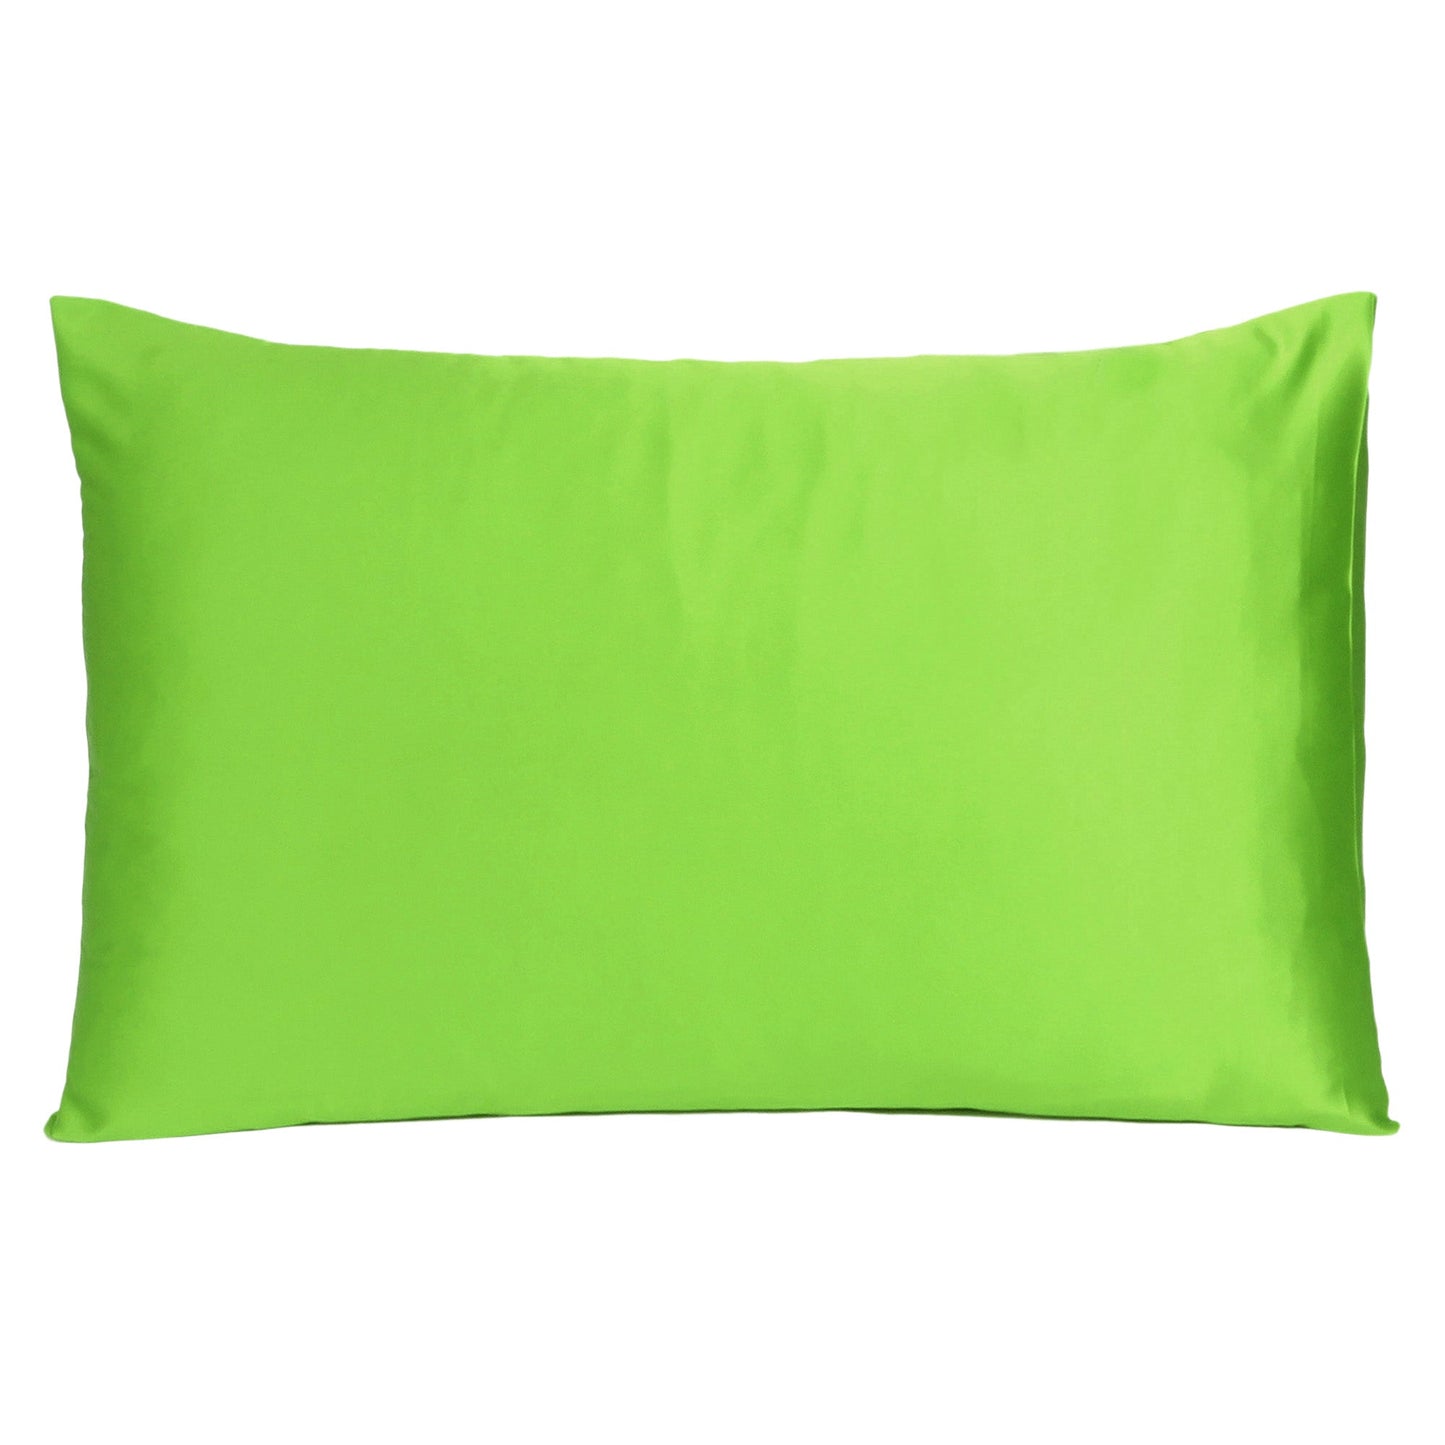 Luxury Soft Plain Satin Silk Pillowcases in Set of 2 - Macaw Green